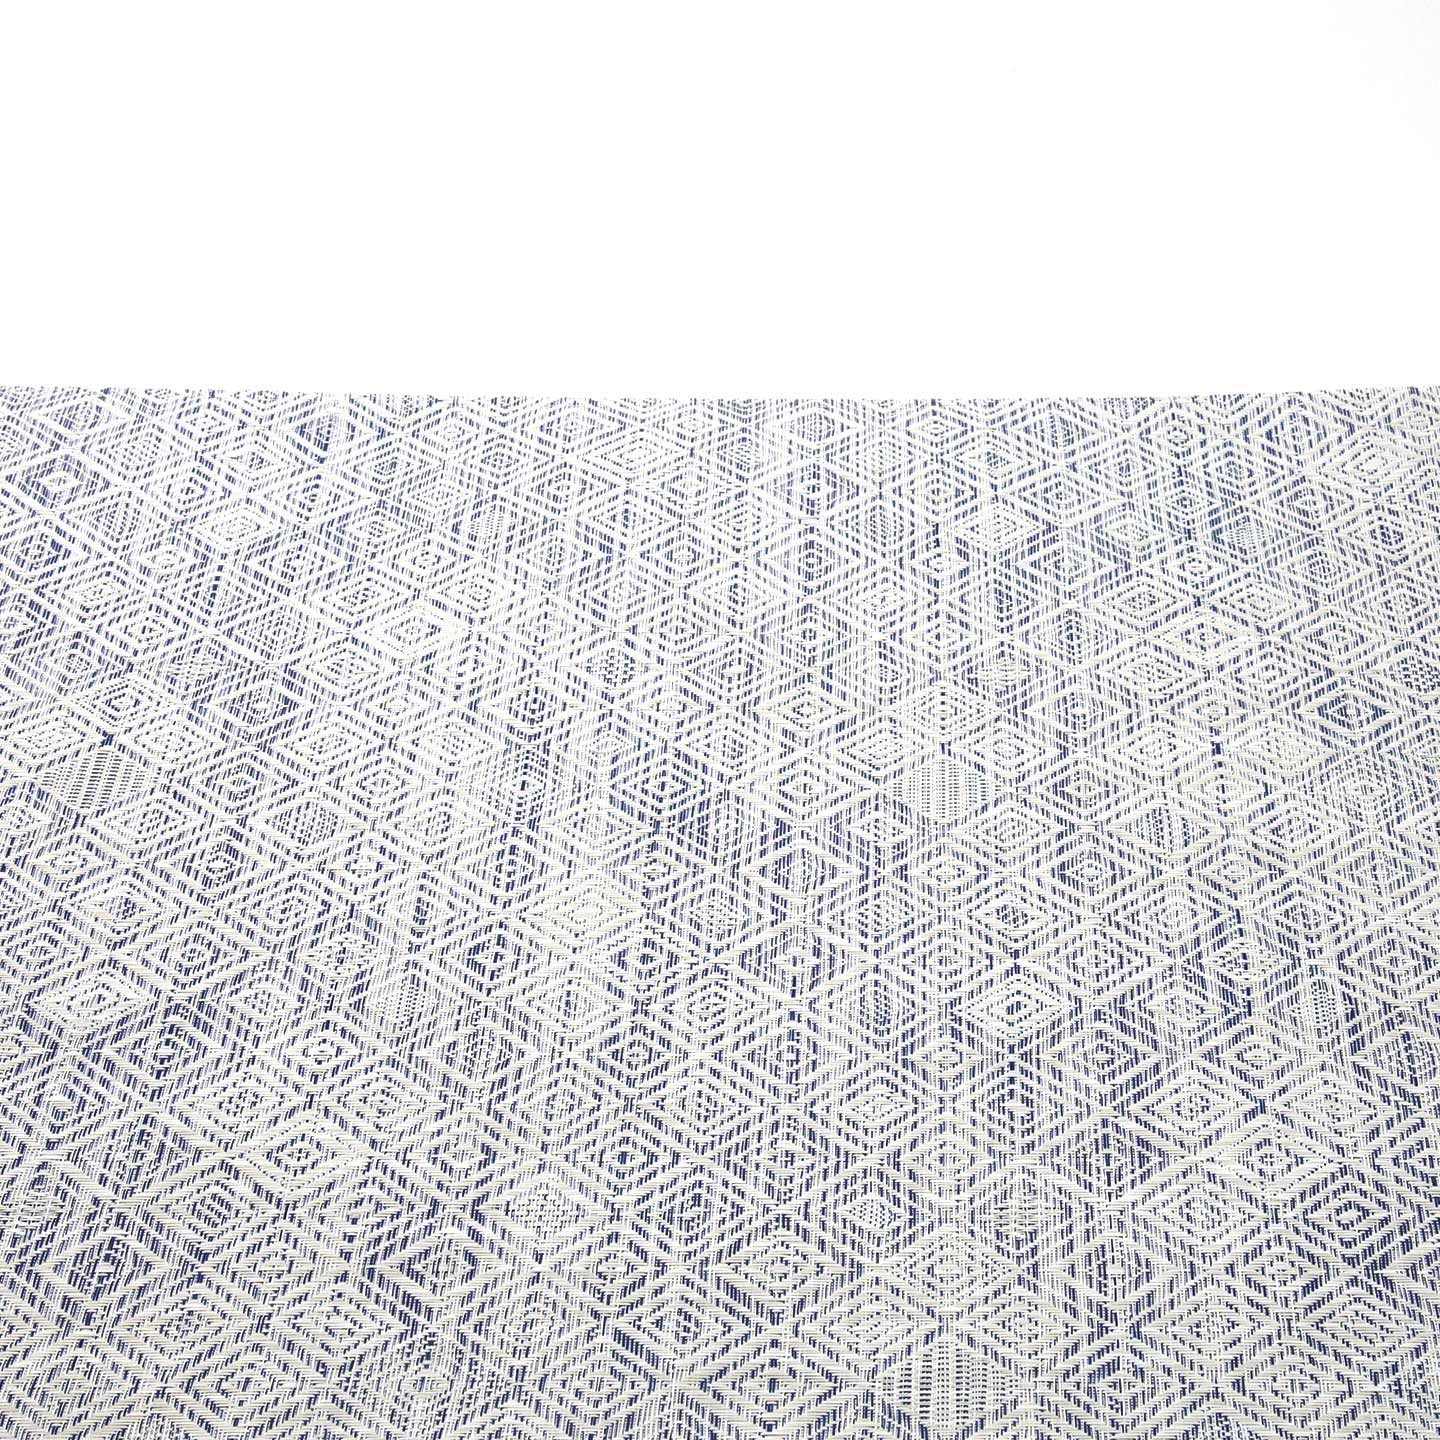 Chilewich Latex Mosaic Floor Mat 96X120 Grey - Distinctive Decor